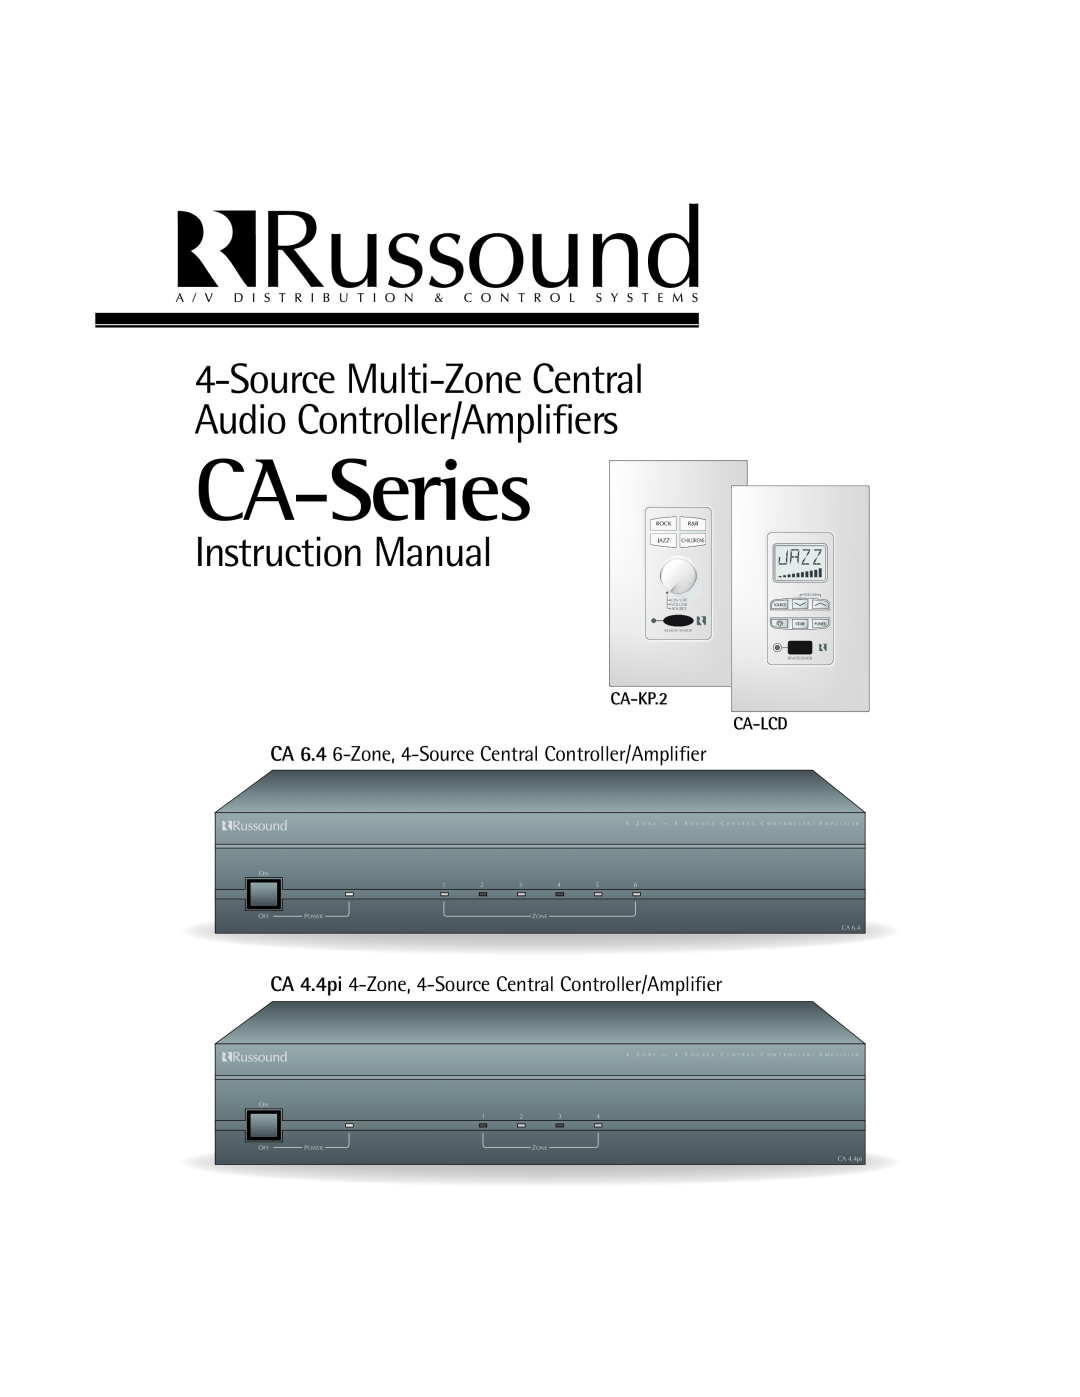 Russound CA-Series instruction manual 